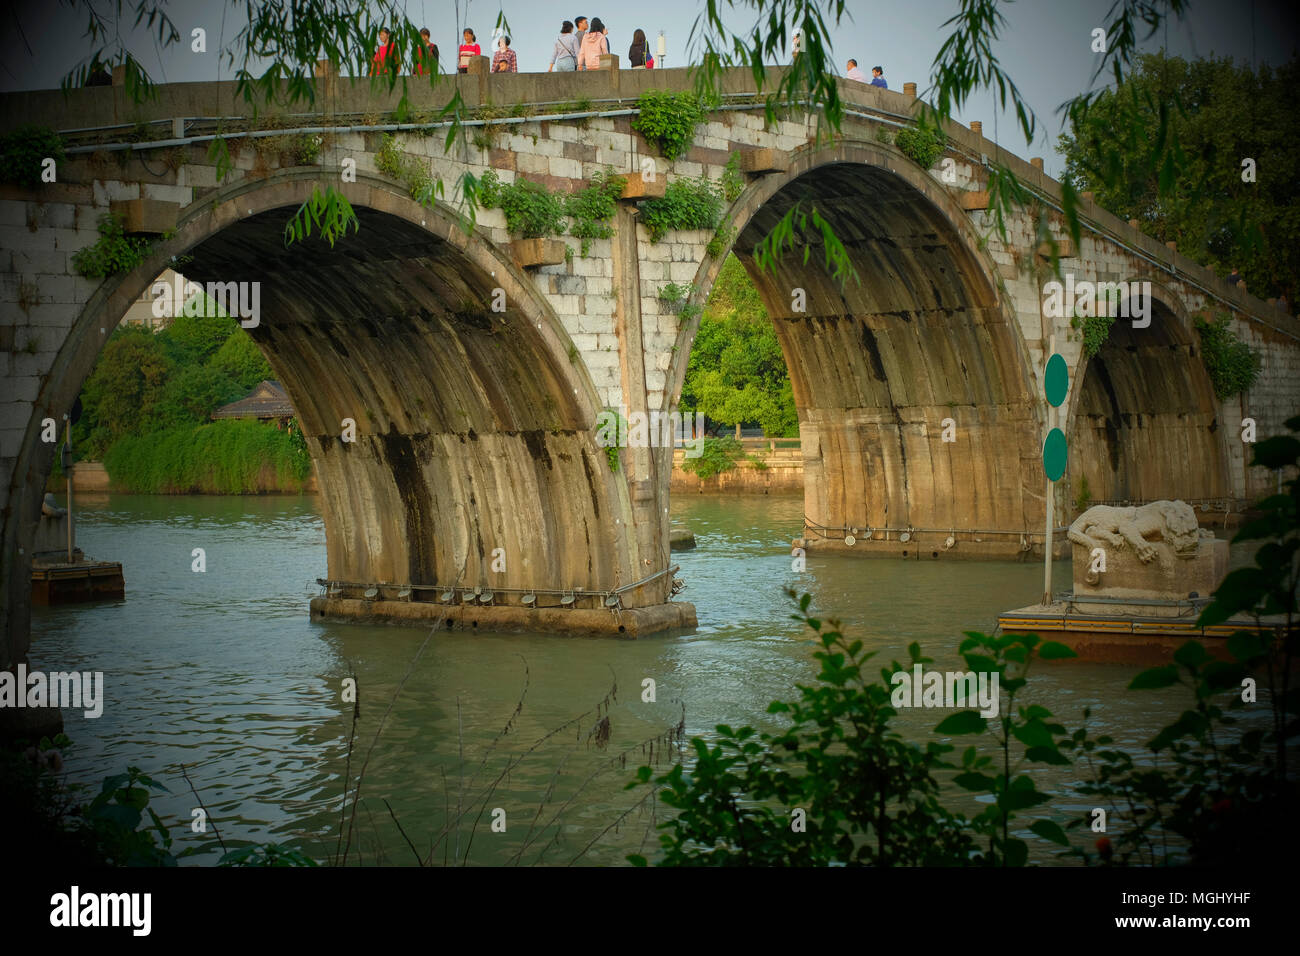 Gongchen bridge on the Grand Canal in Hangzhou,China. It is a landmark of Hangzhou. Stock Photo